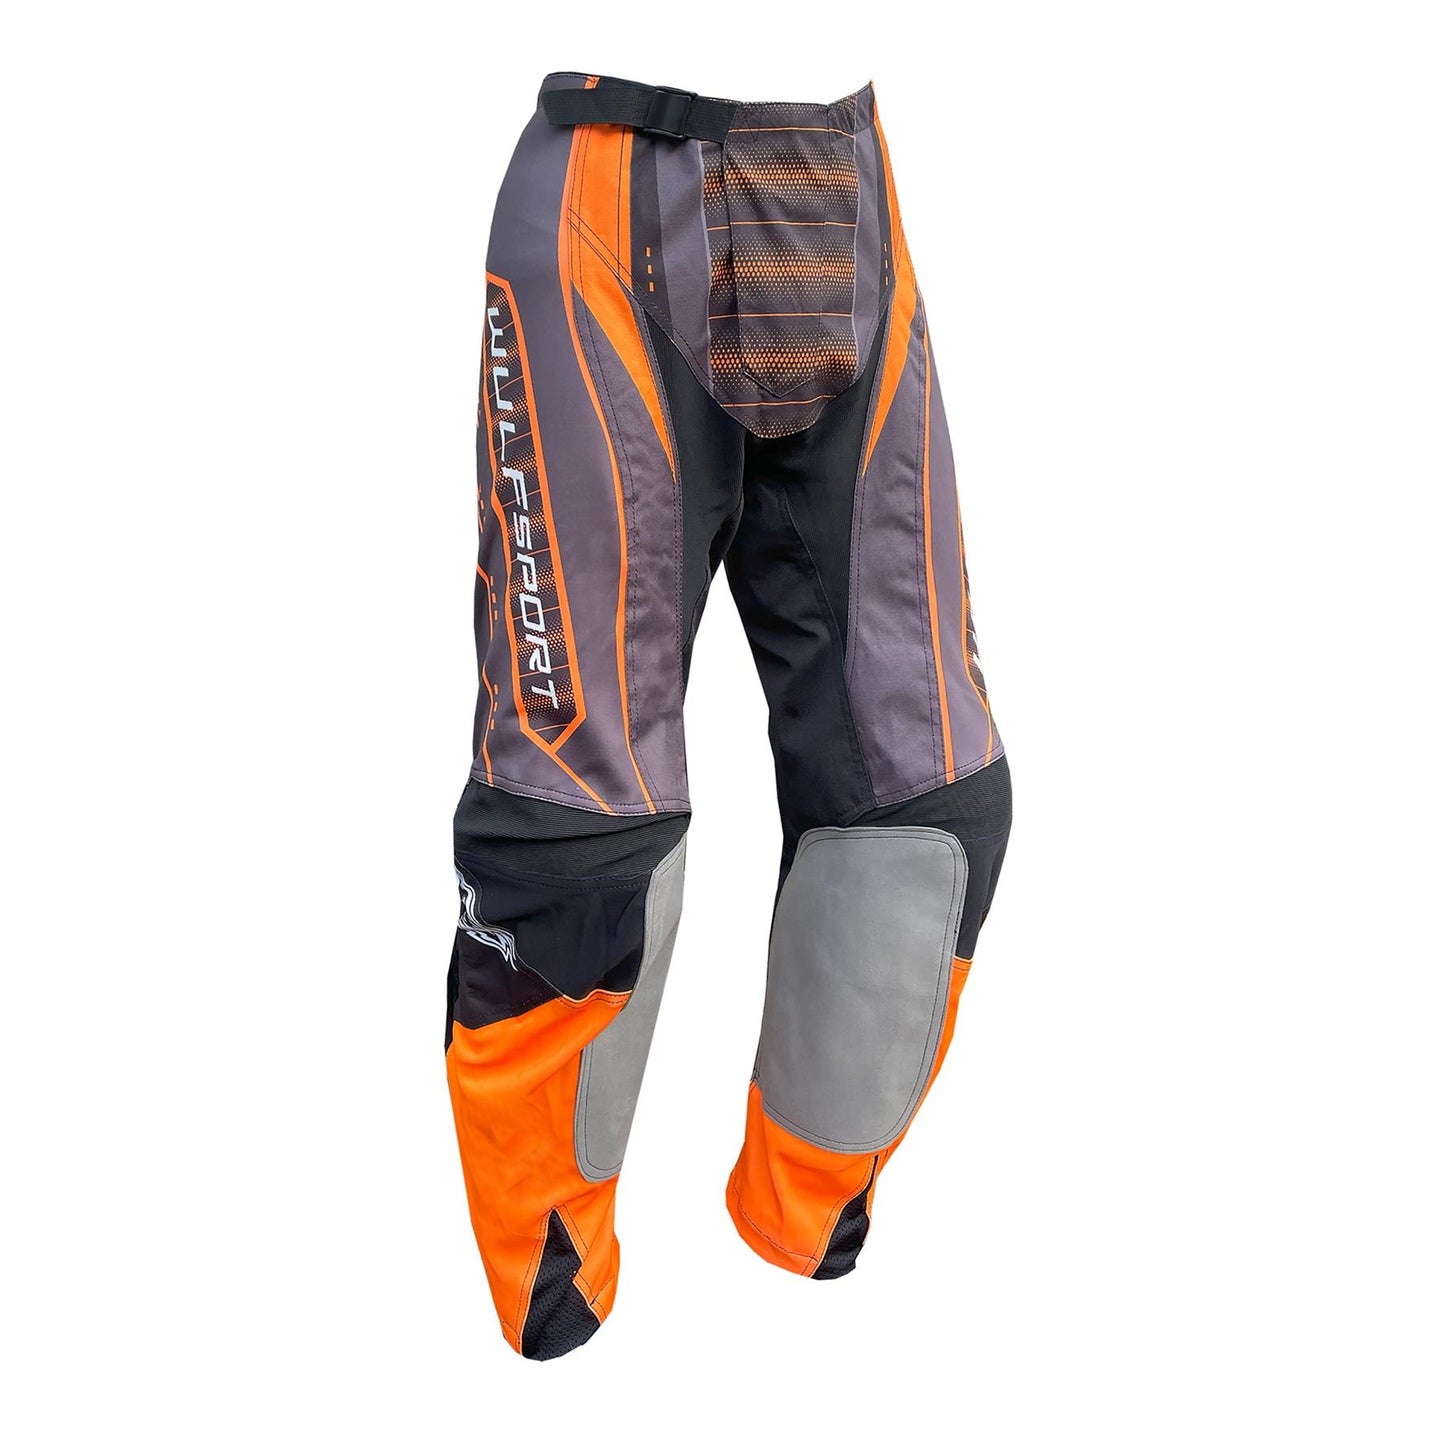 Wulfsport Corsair Adult Motocross Pant - Black/Orange